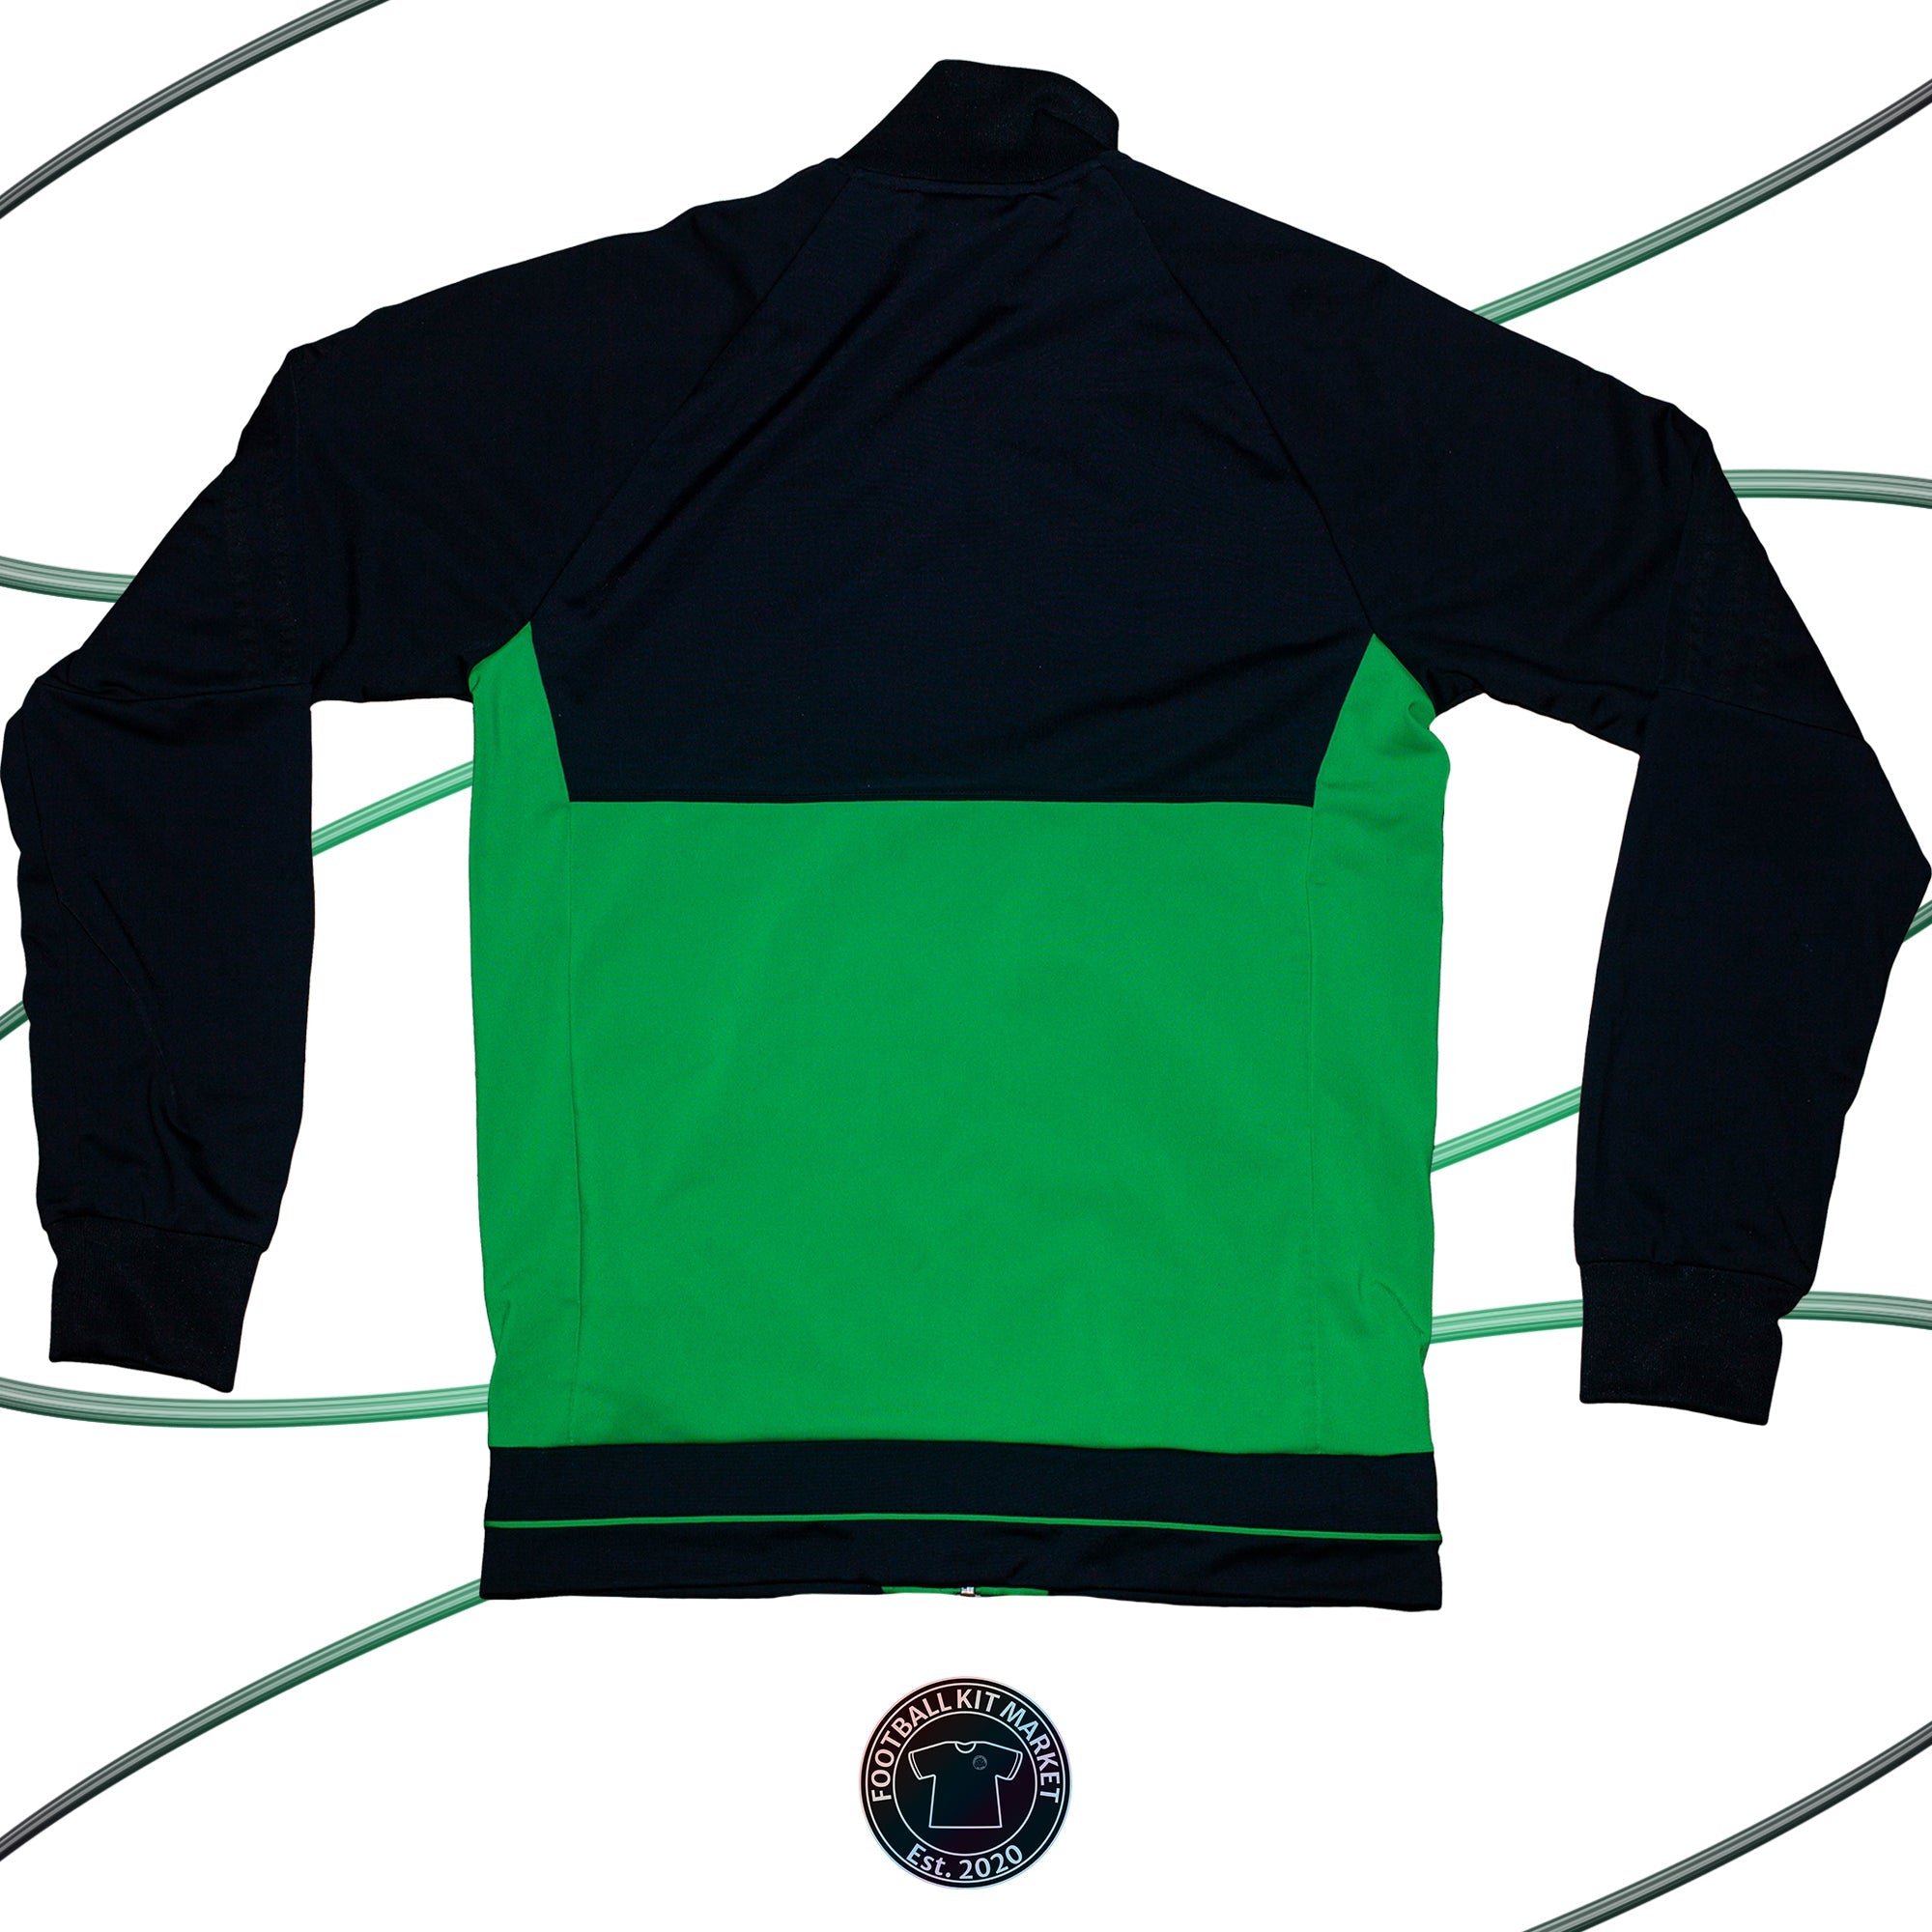 Genuine NOTTINGHAM FOREST Jacket - ADIDAS (S) - Product Image from Football Kit Market